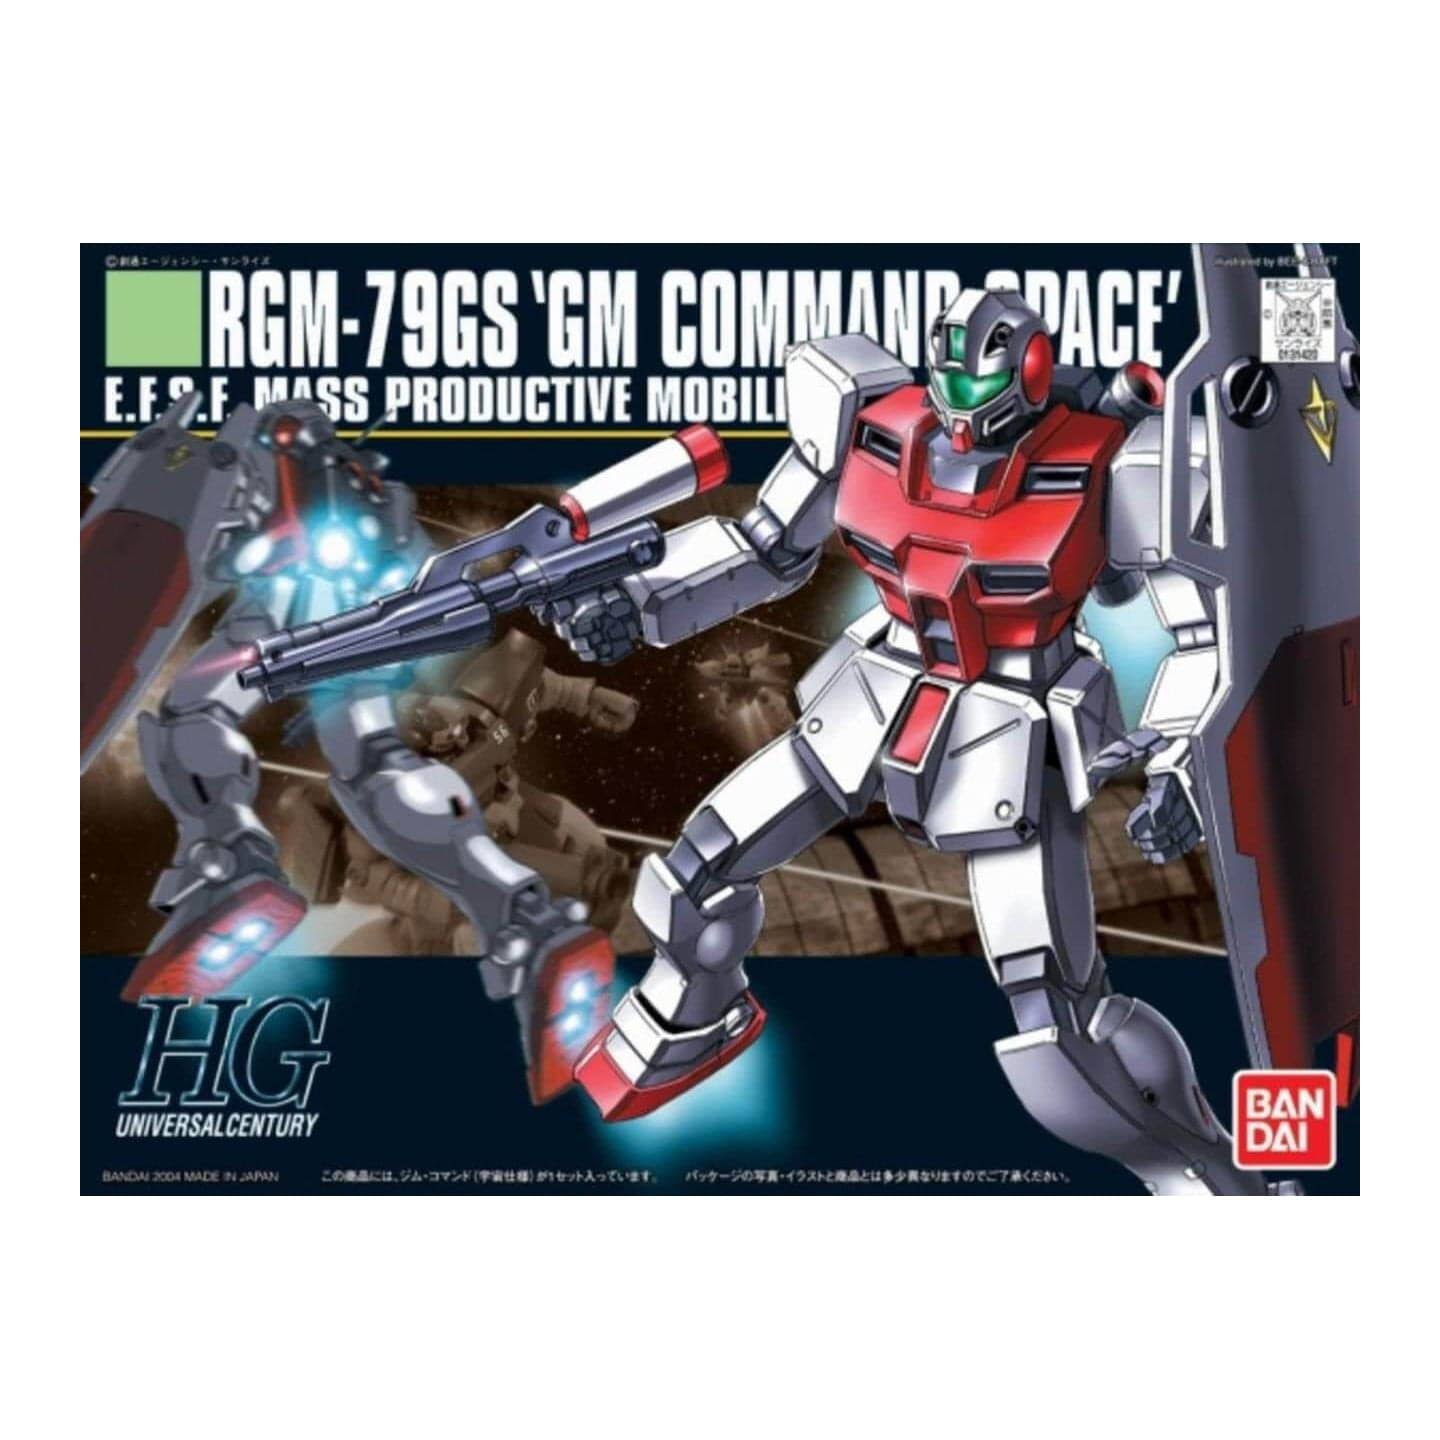 Bandai HGUC Gundam 0080 GM Command Space Type HG Model Kit - 1/144 Scale